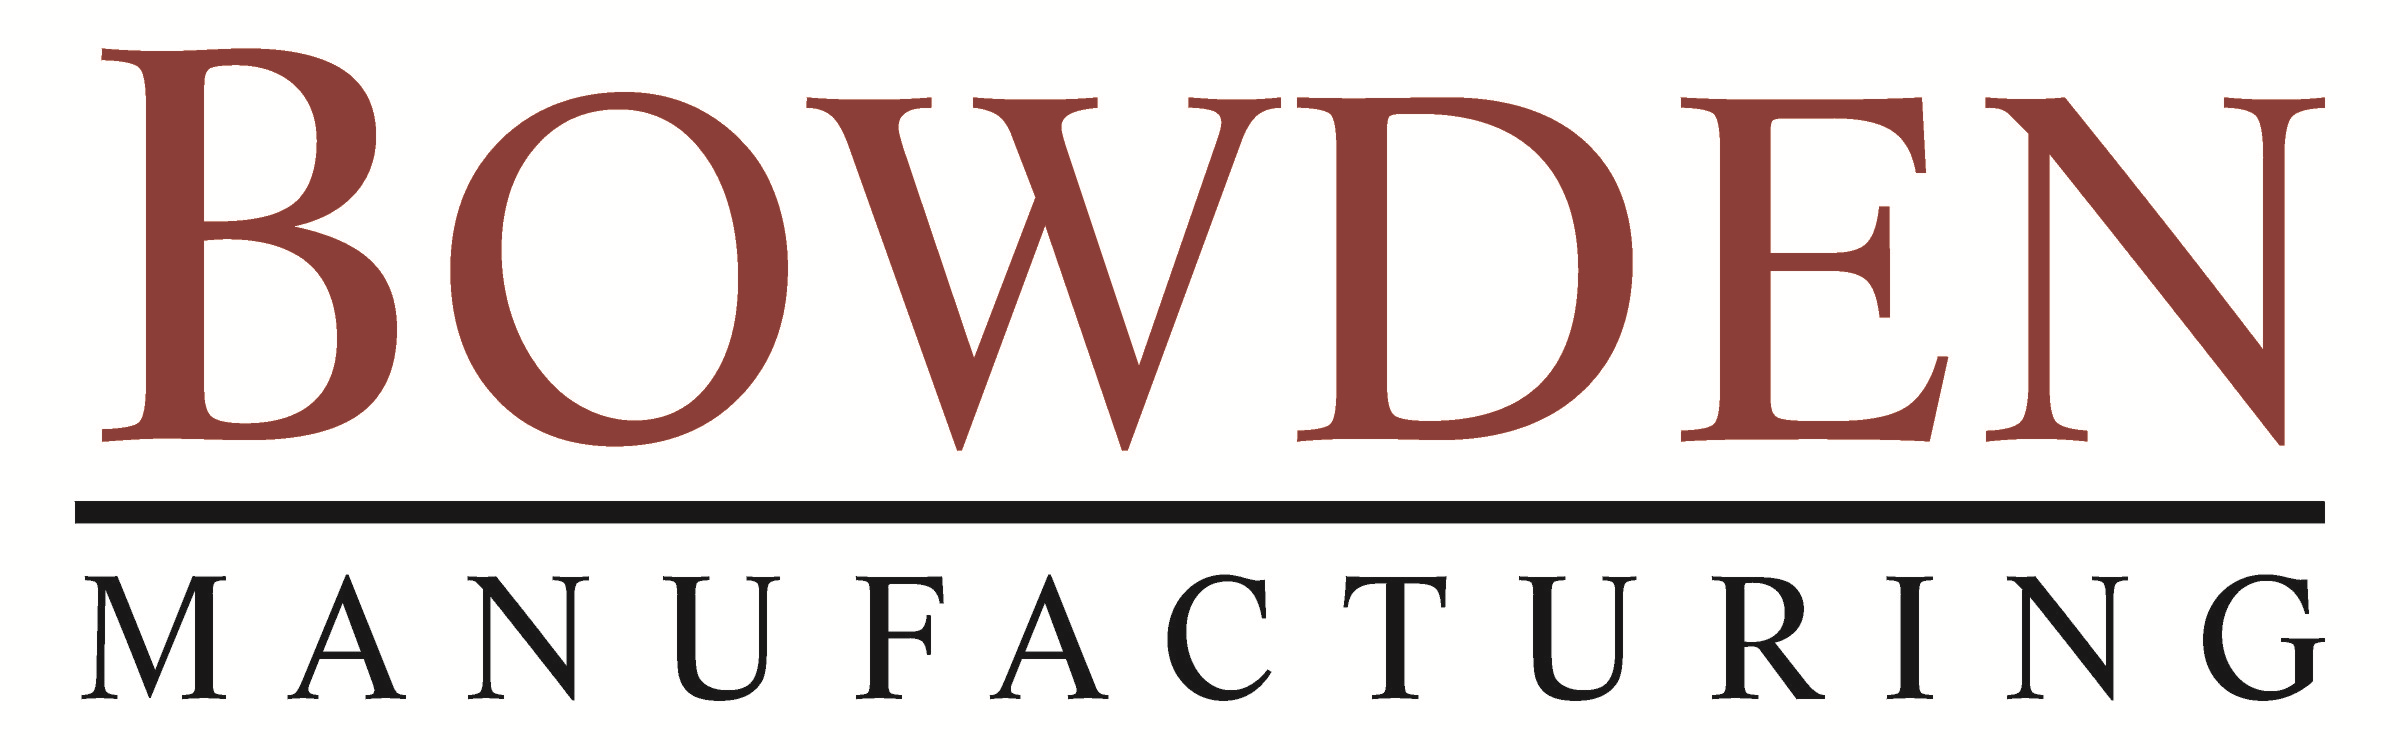 Bowden Manufacturing logo